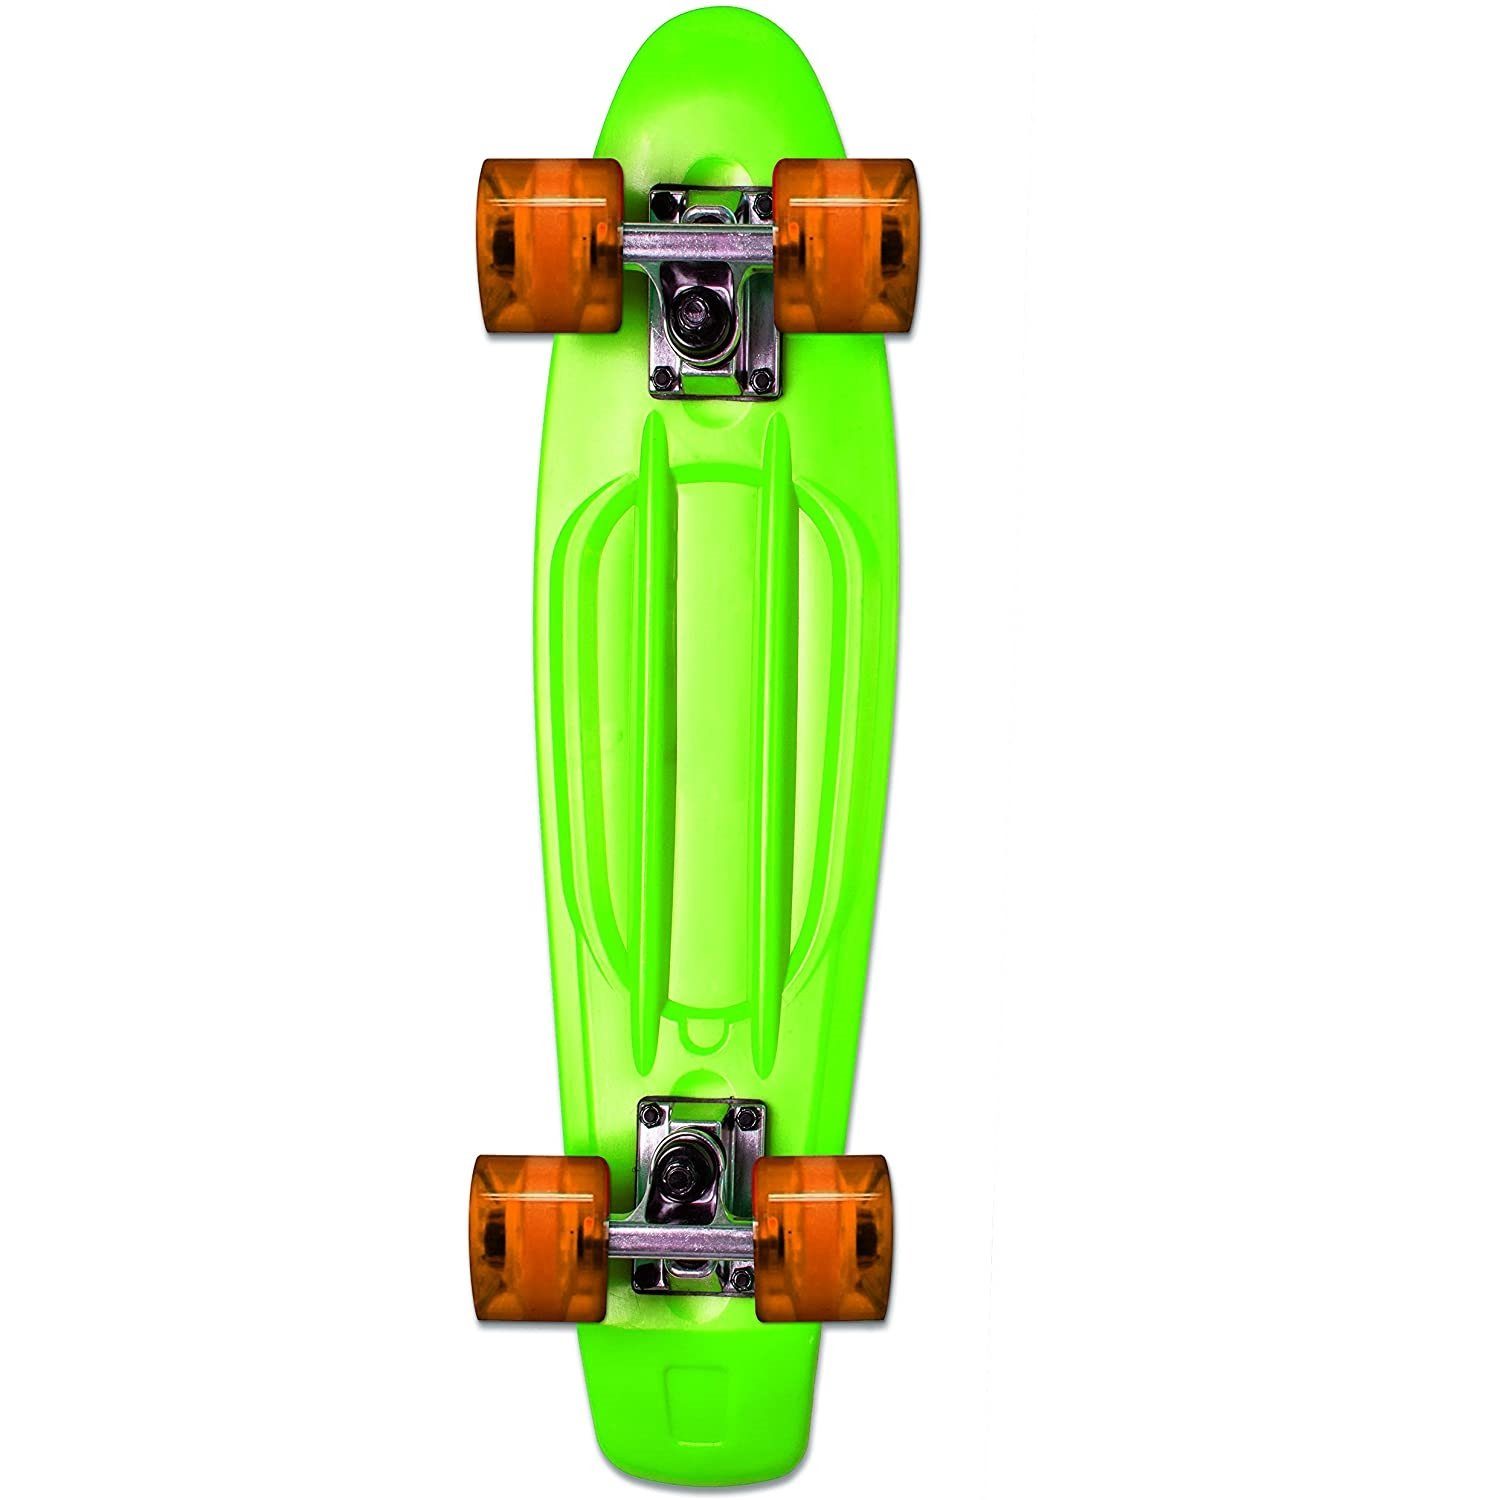 authentic No & Rules Fun, Inlineskates Skateboard 356 sports toys